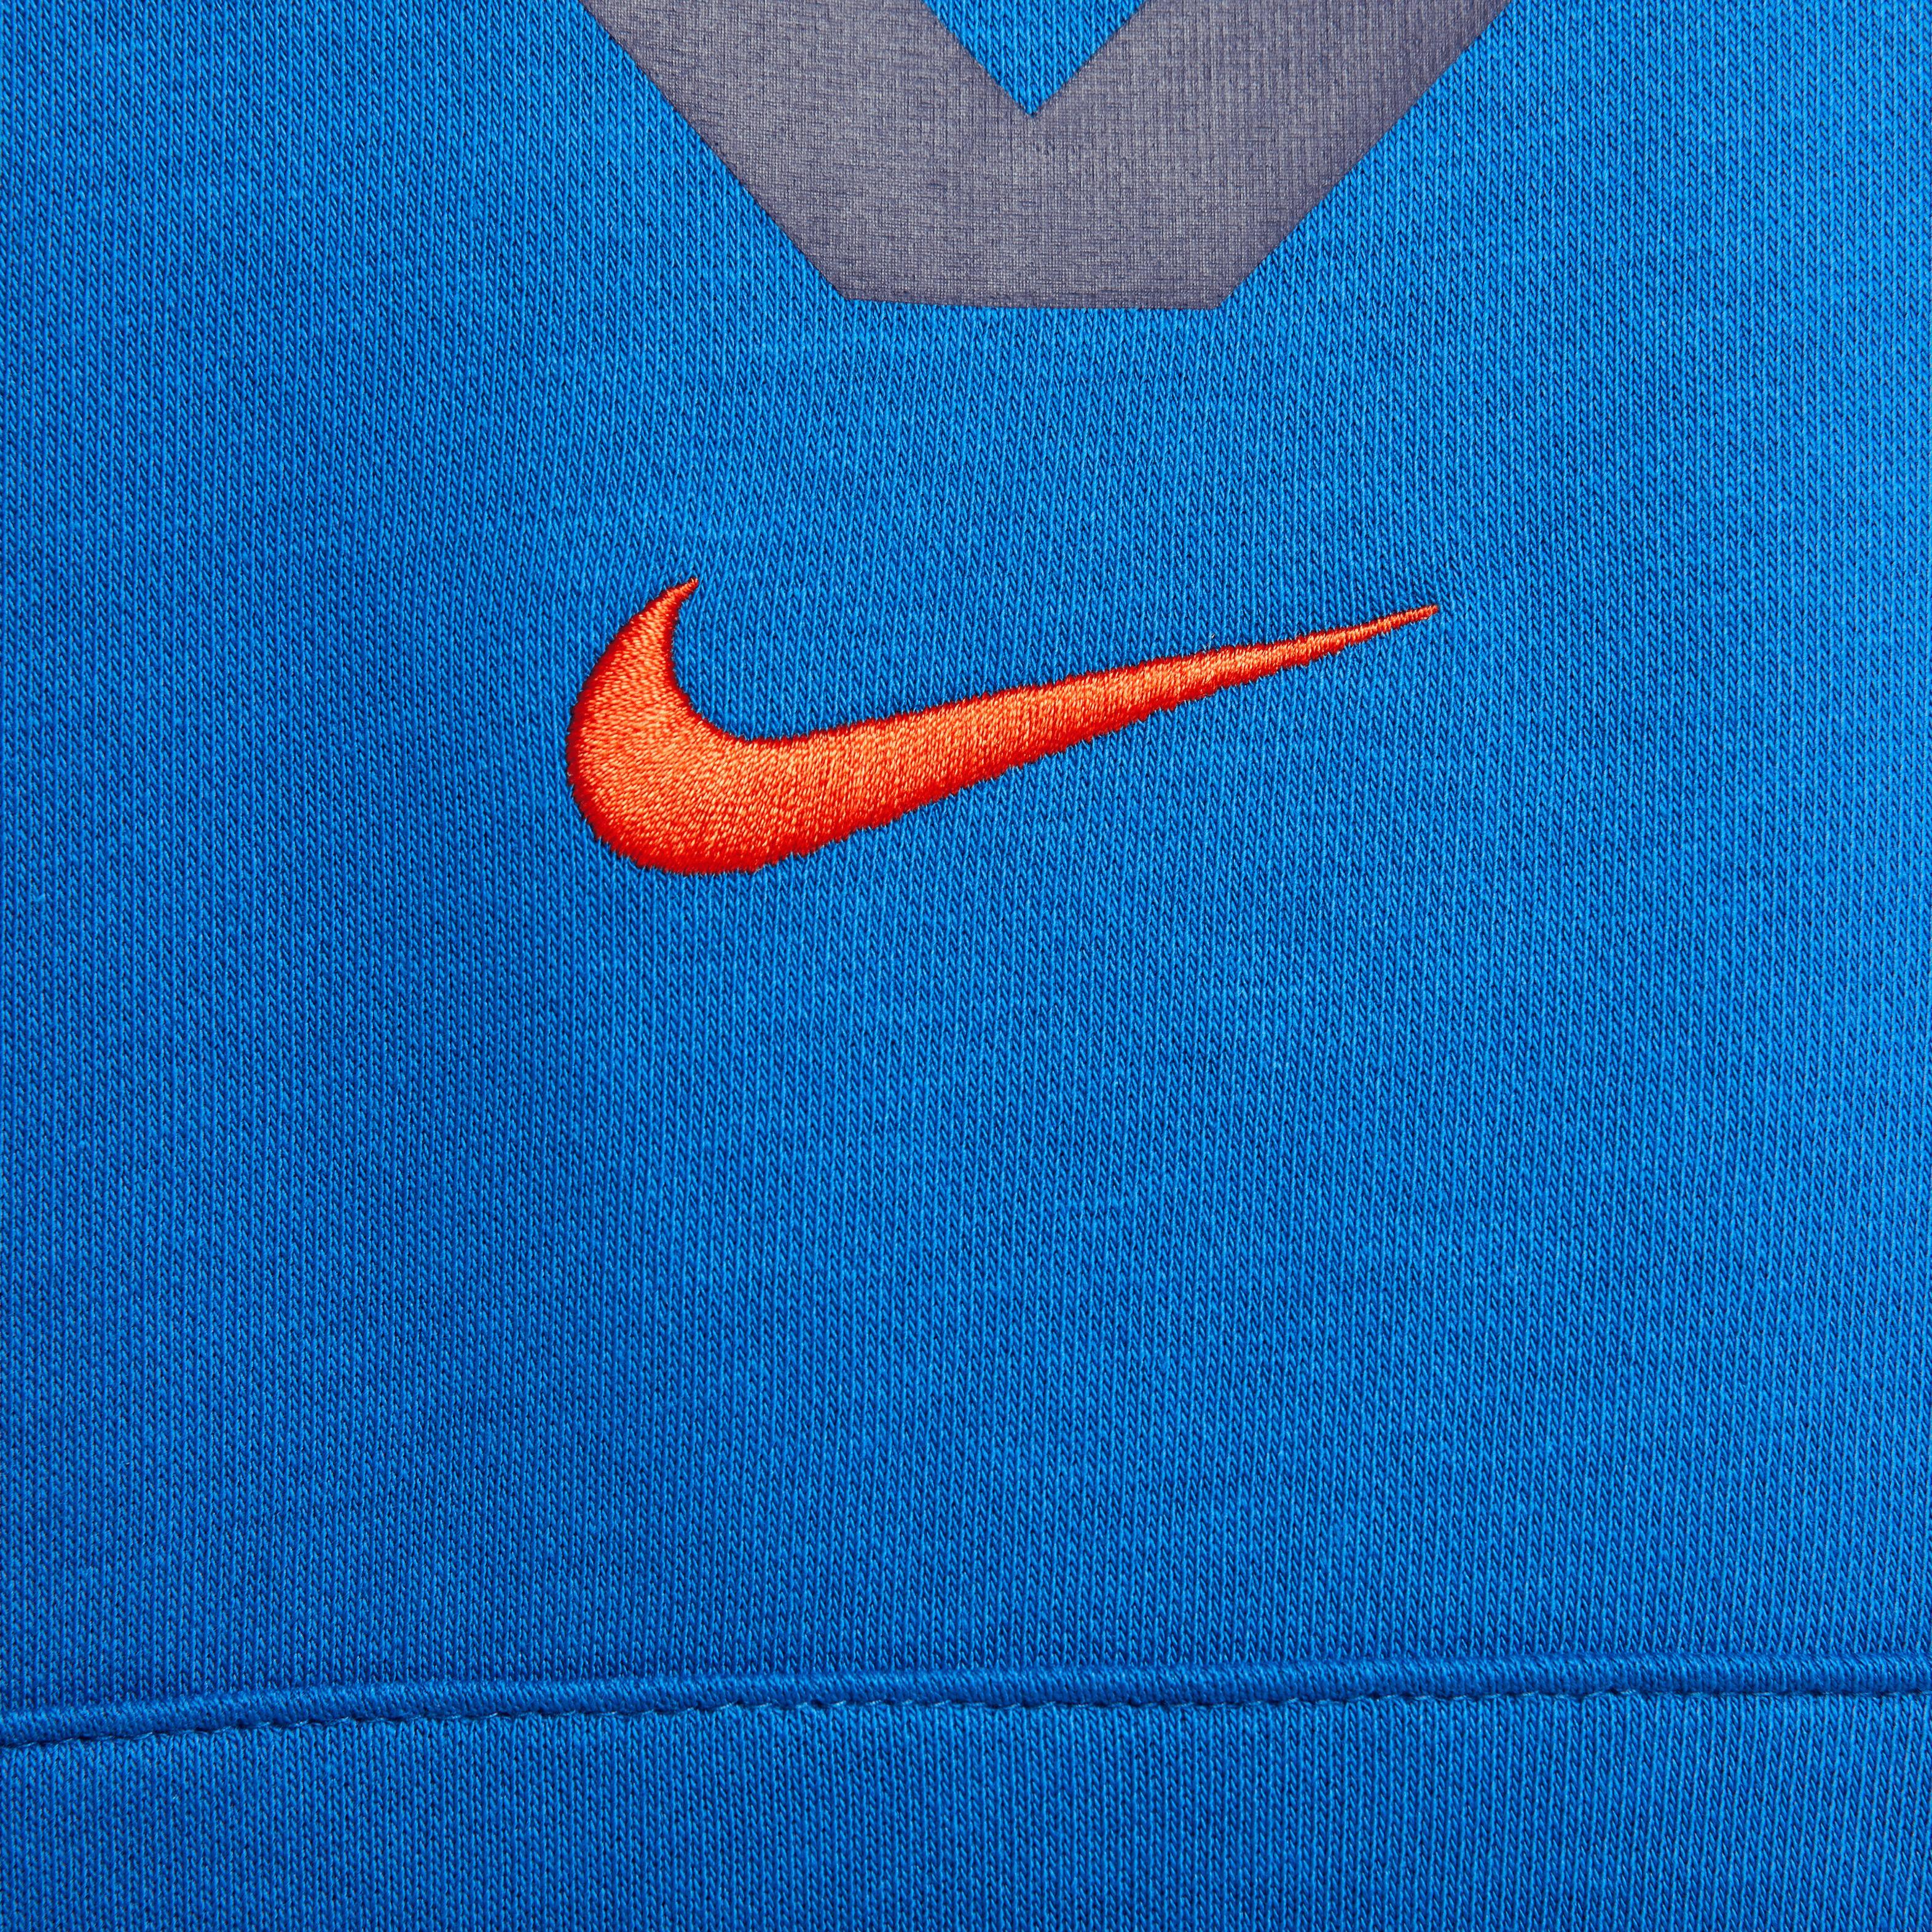 Nike Men's Club América Fleece Pullover Hoodie-Blue